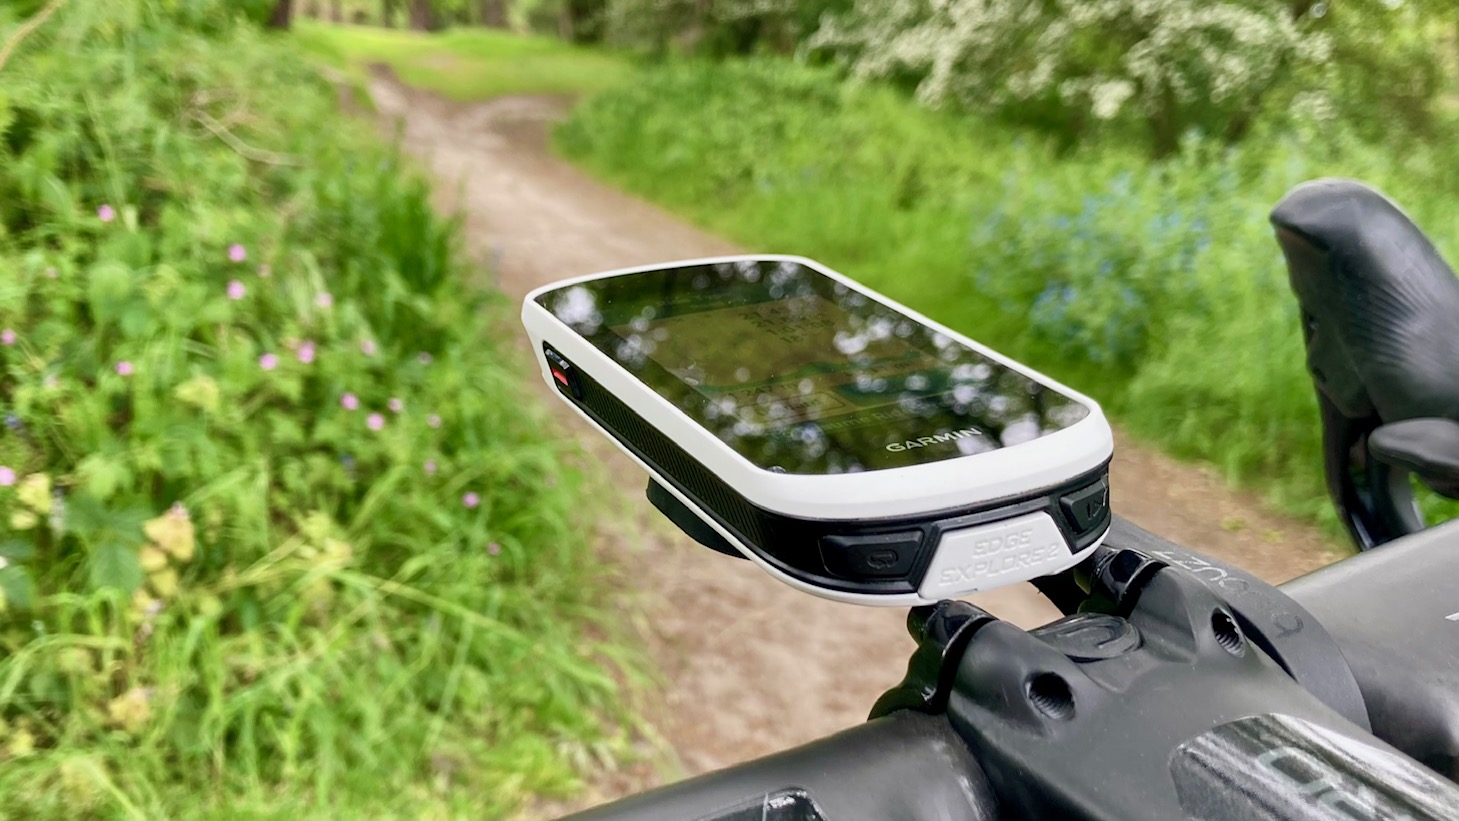 Hands-on with Garmin's new Edge 20 & Edge 25 GPS units